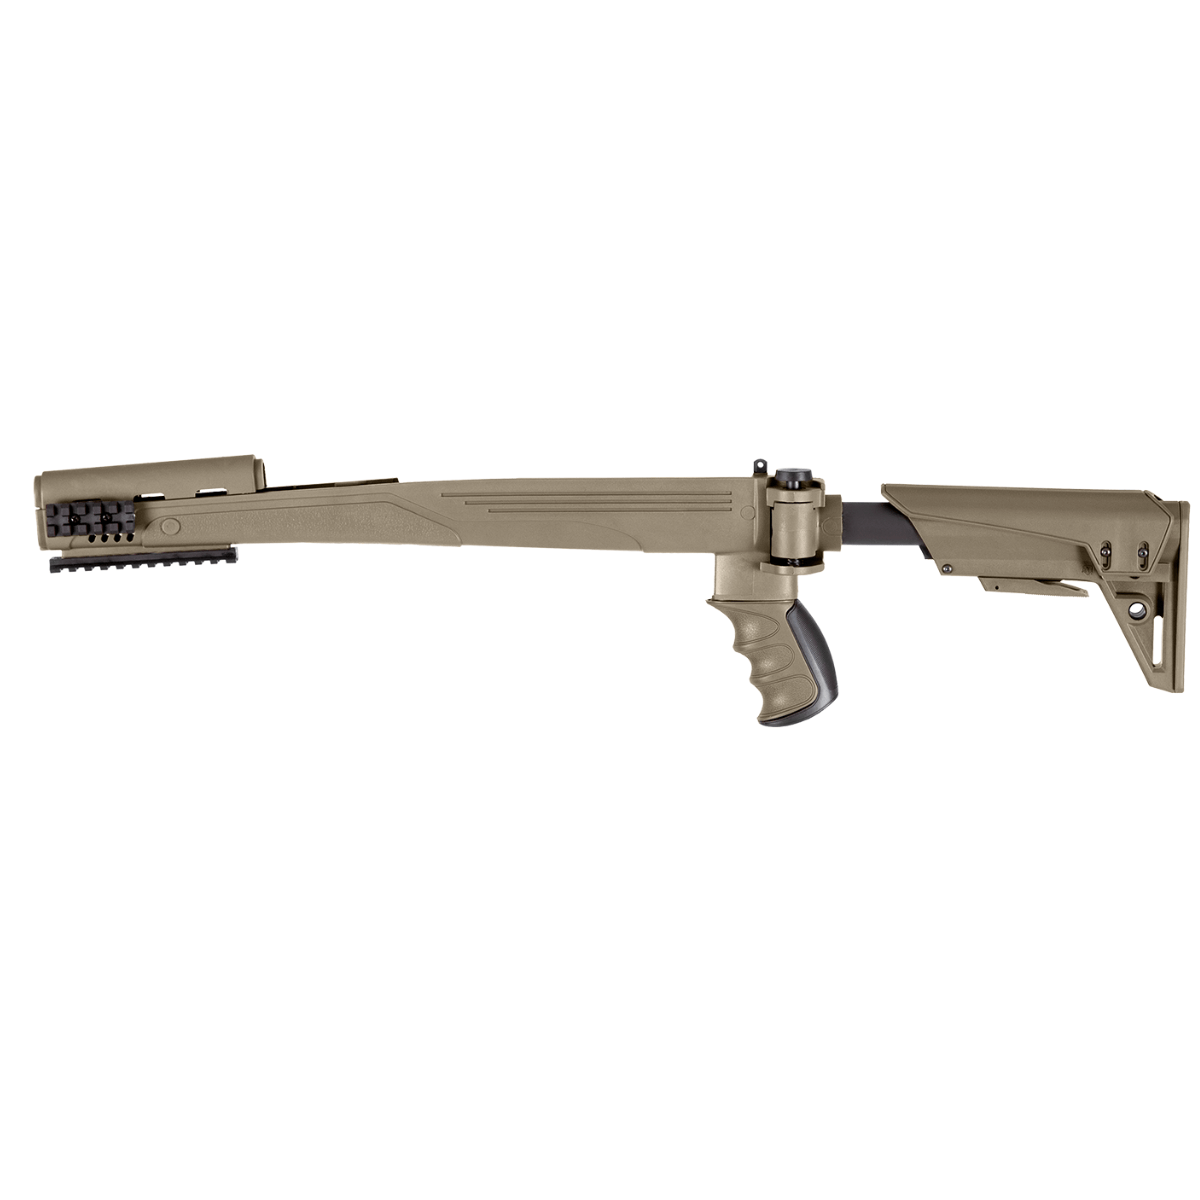 ATI Top Folding Shotgun Stock w/ Pistol Grip